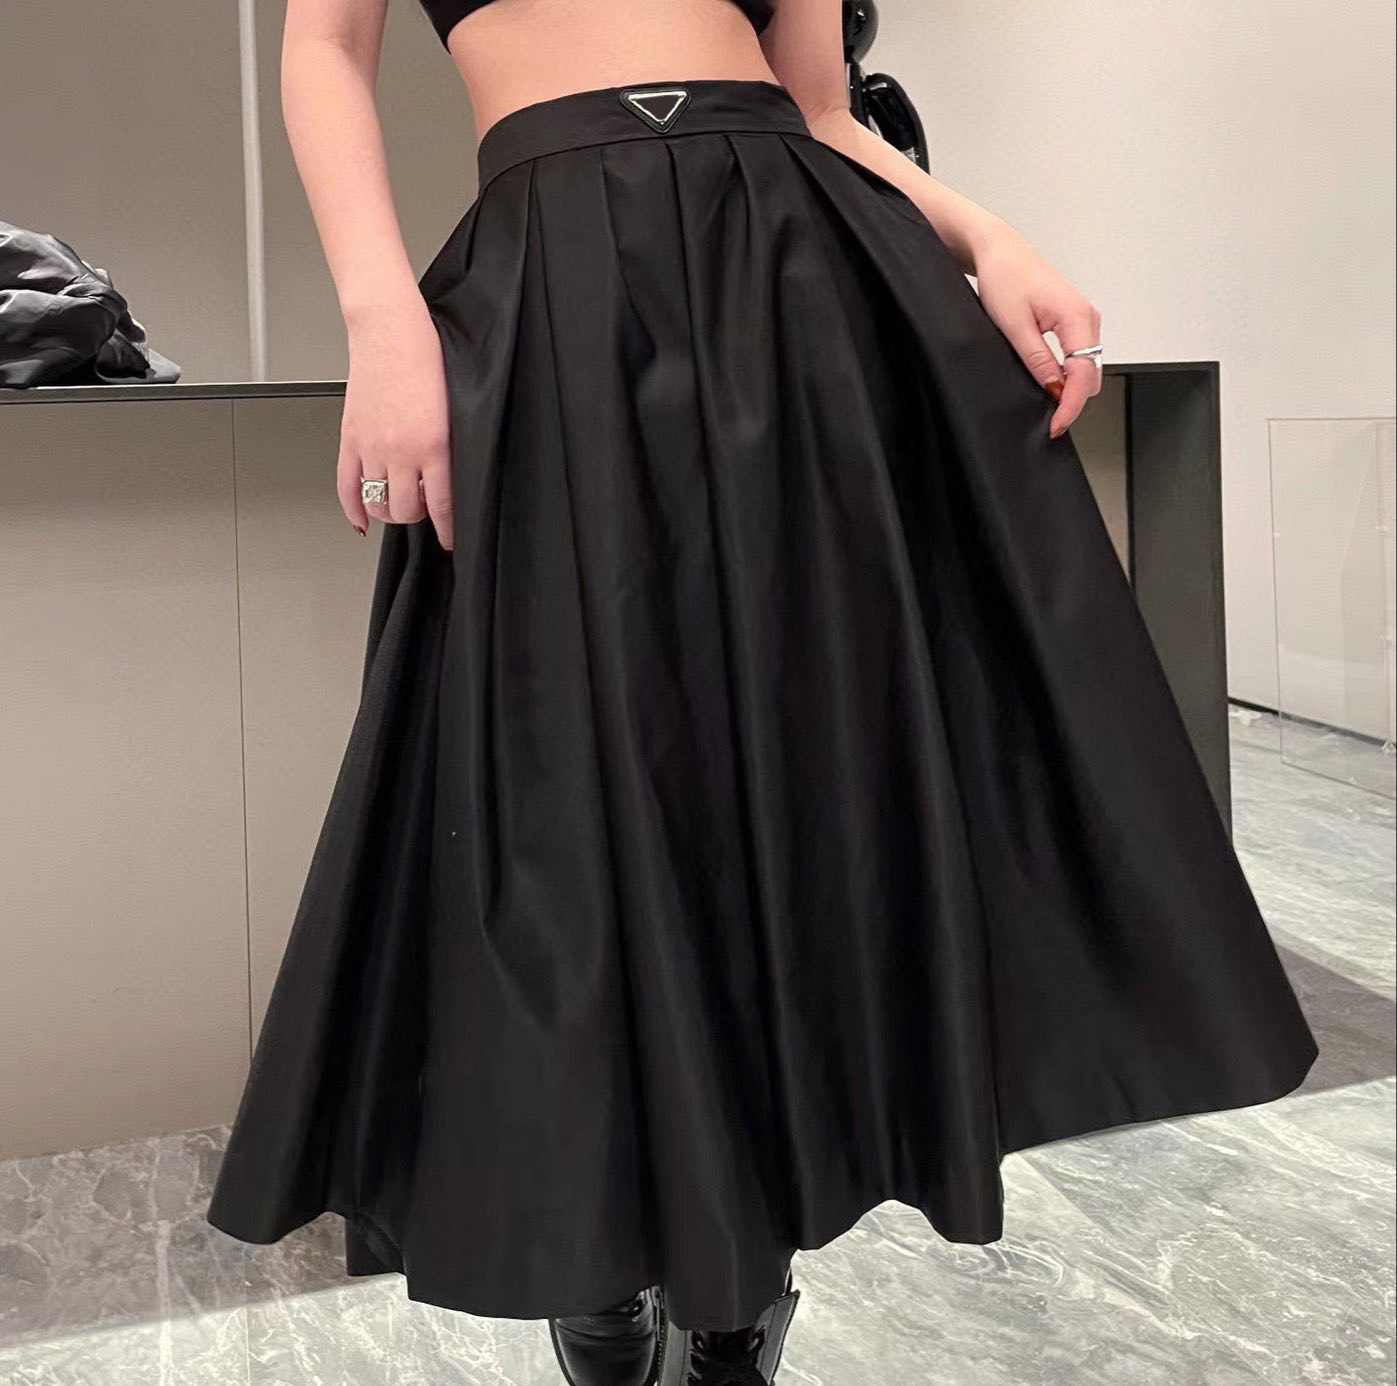 

Designer womens dress fashion re-nylon Casual Dresses summer super large skirt show thin pants party skirts black Women' Clothing Size -L